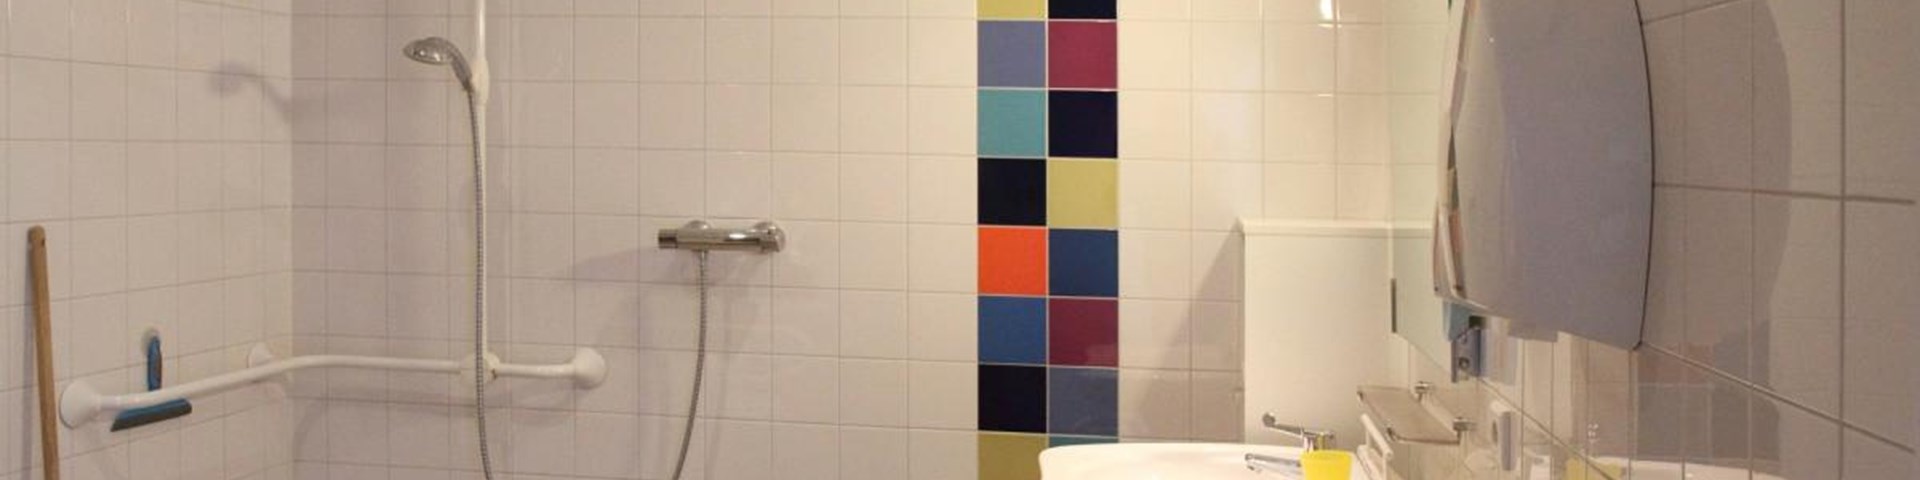 badkamer respijthuis alkmaar.jpg